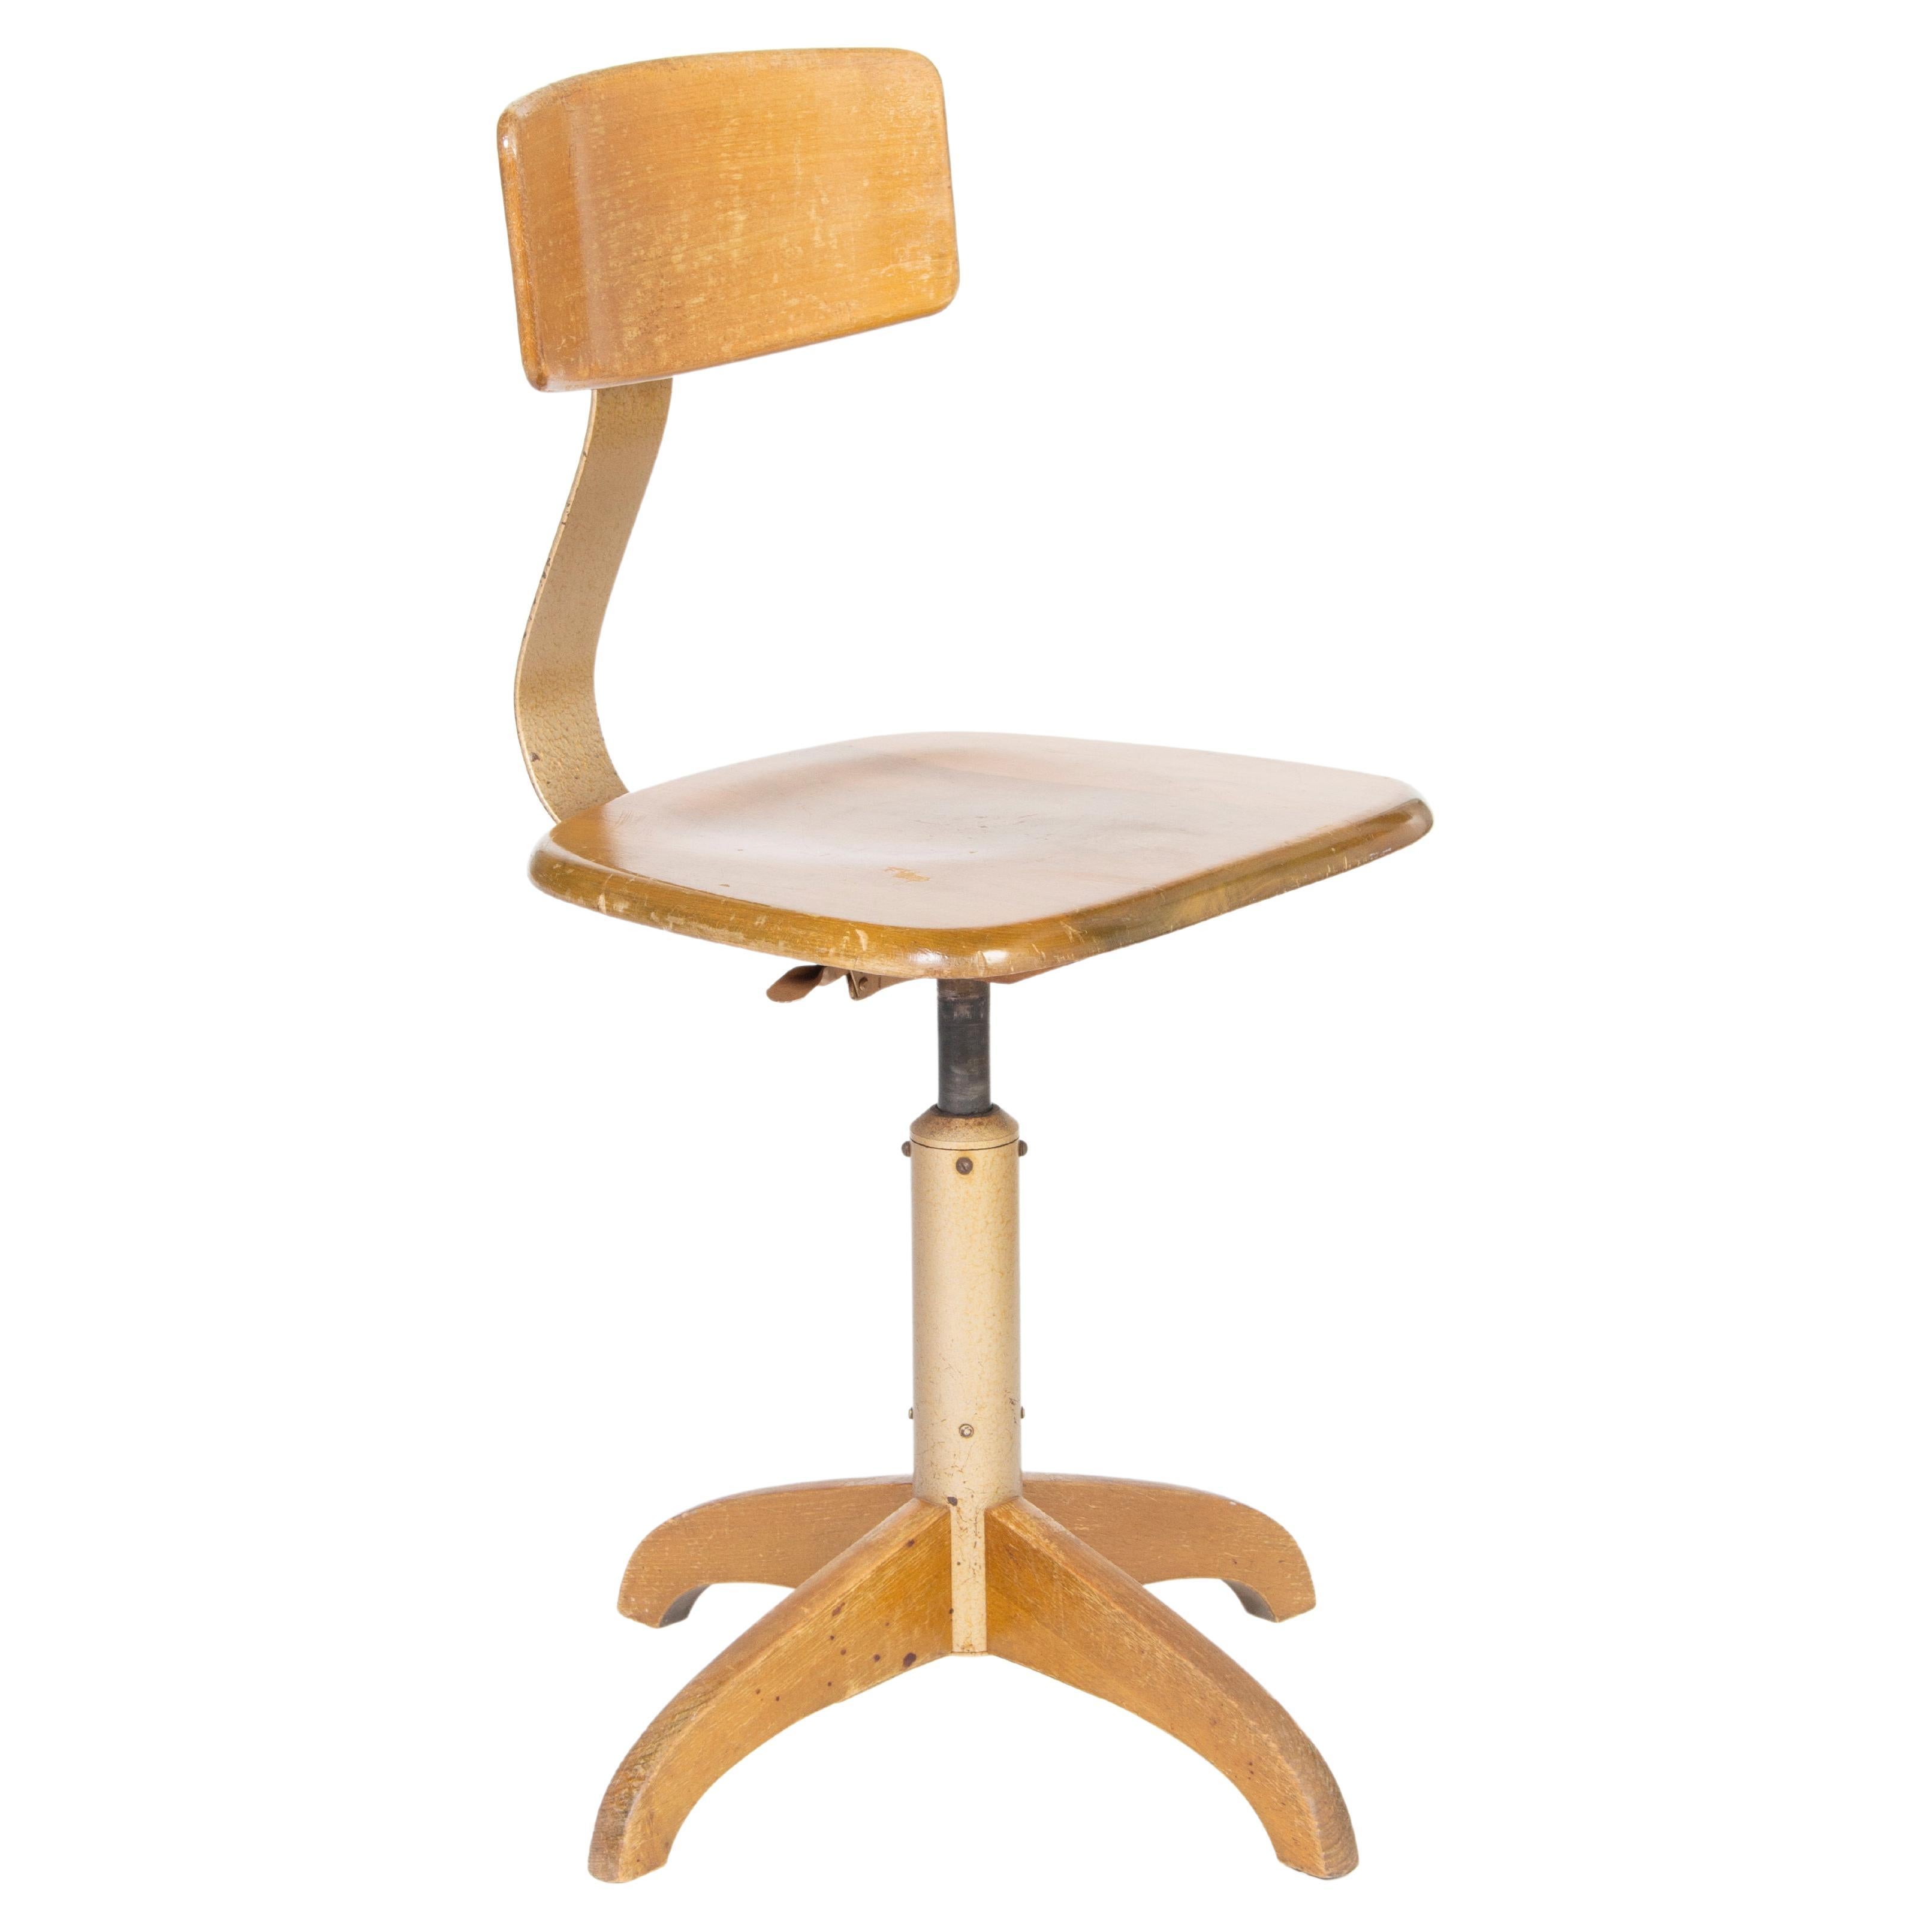 Bauhaus Ama Elastik Wooden Workshop Swivel Chair, Model No. 364 For Sale